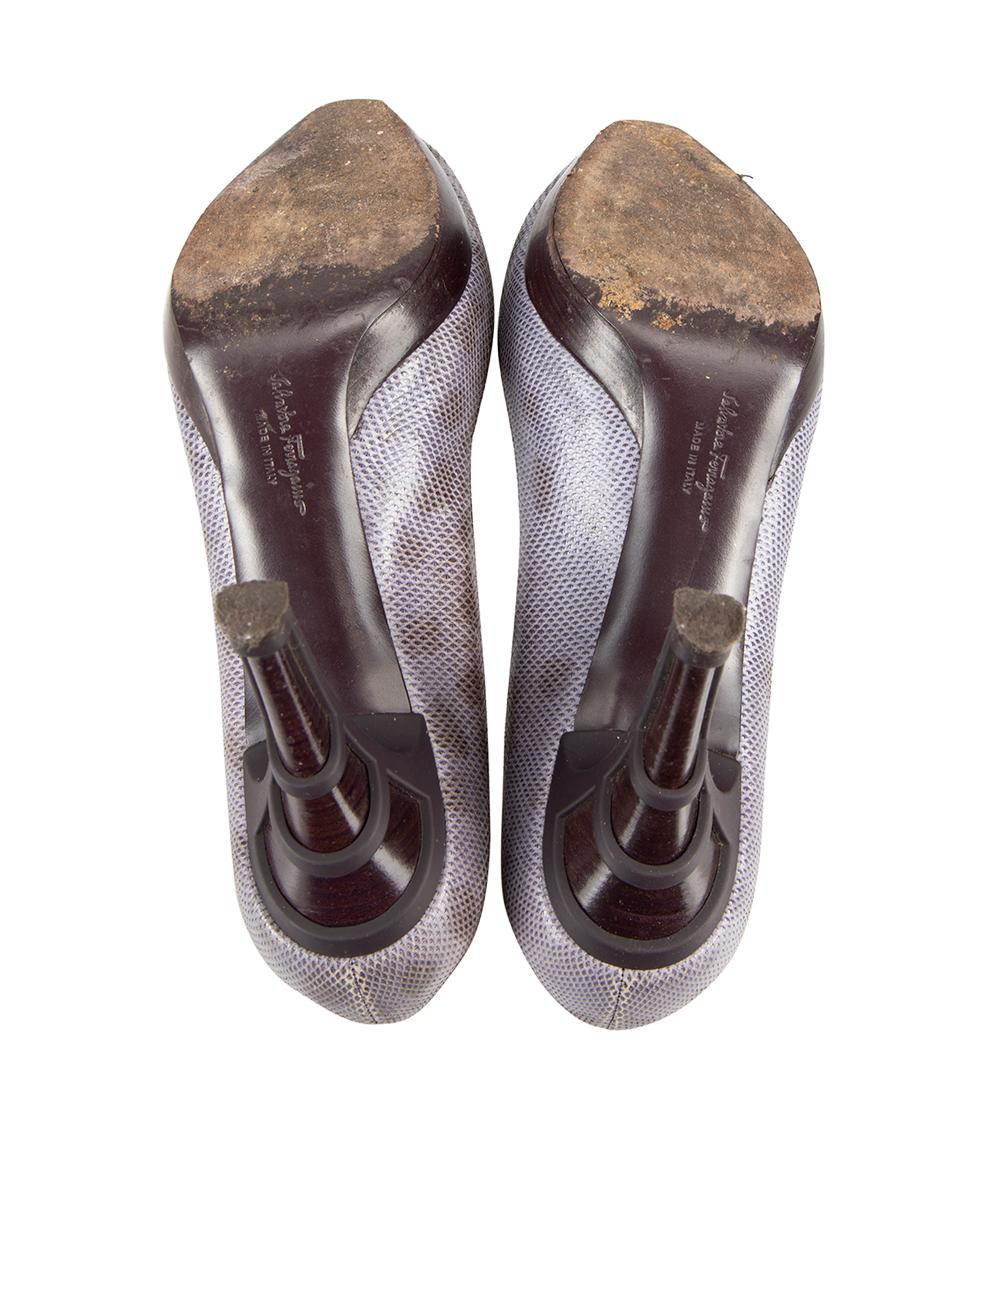 Women's Salvatore Ferragamo Purple Snakeskin Animal Print Peep Toe Heels Size US 7.5 For Sale